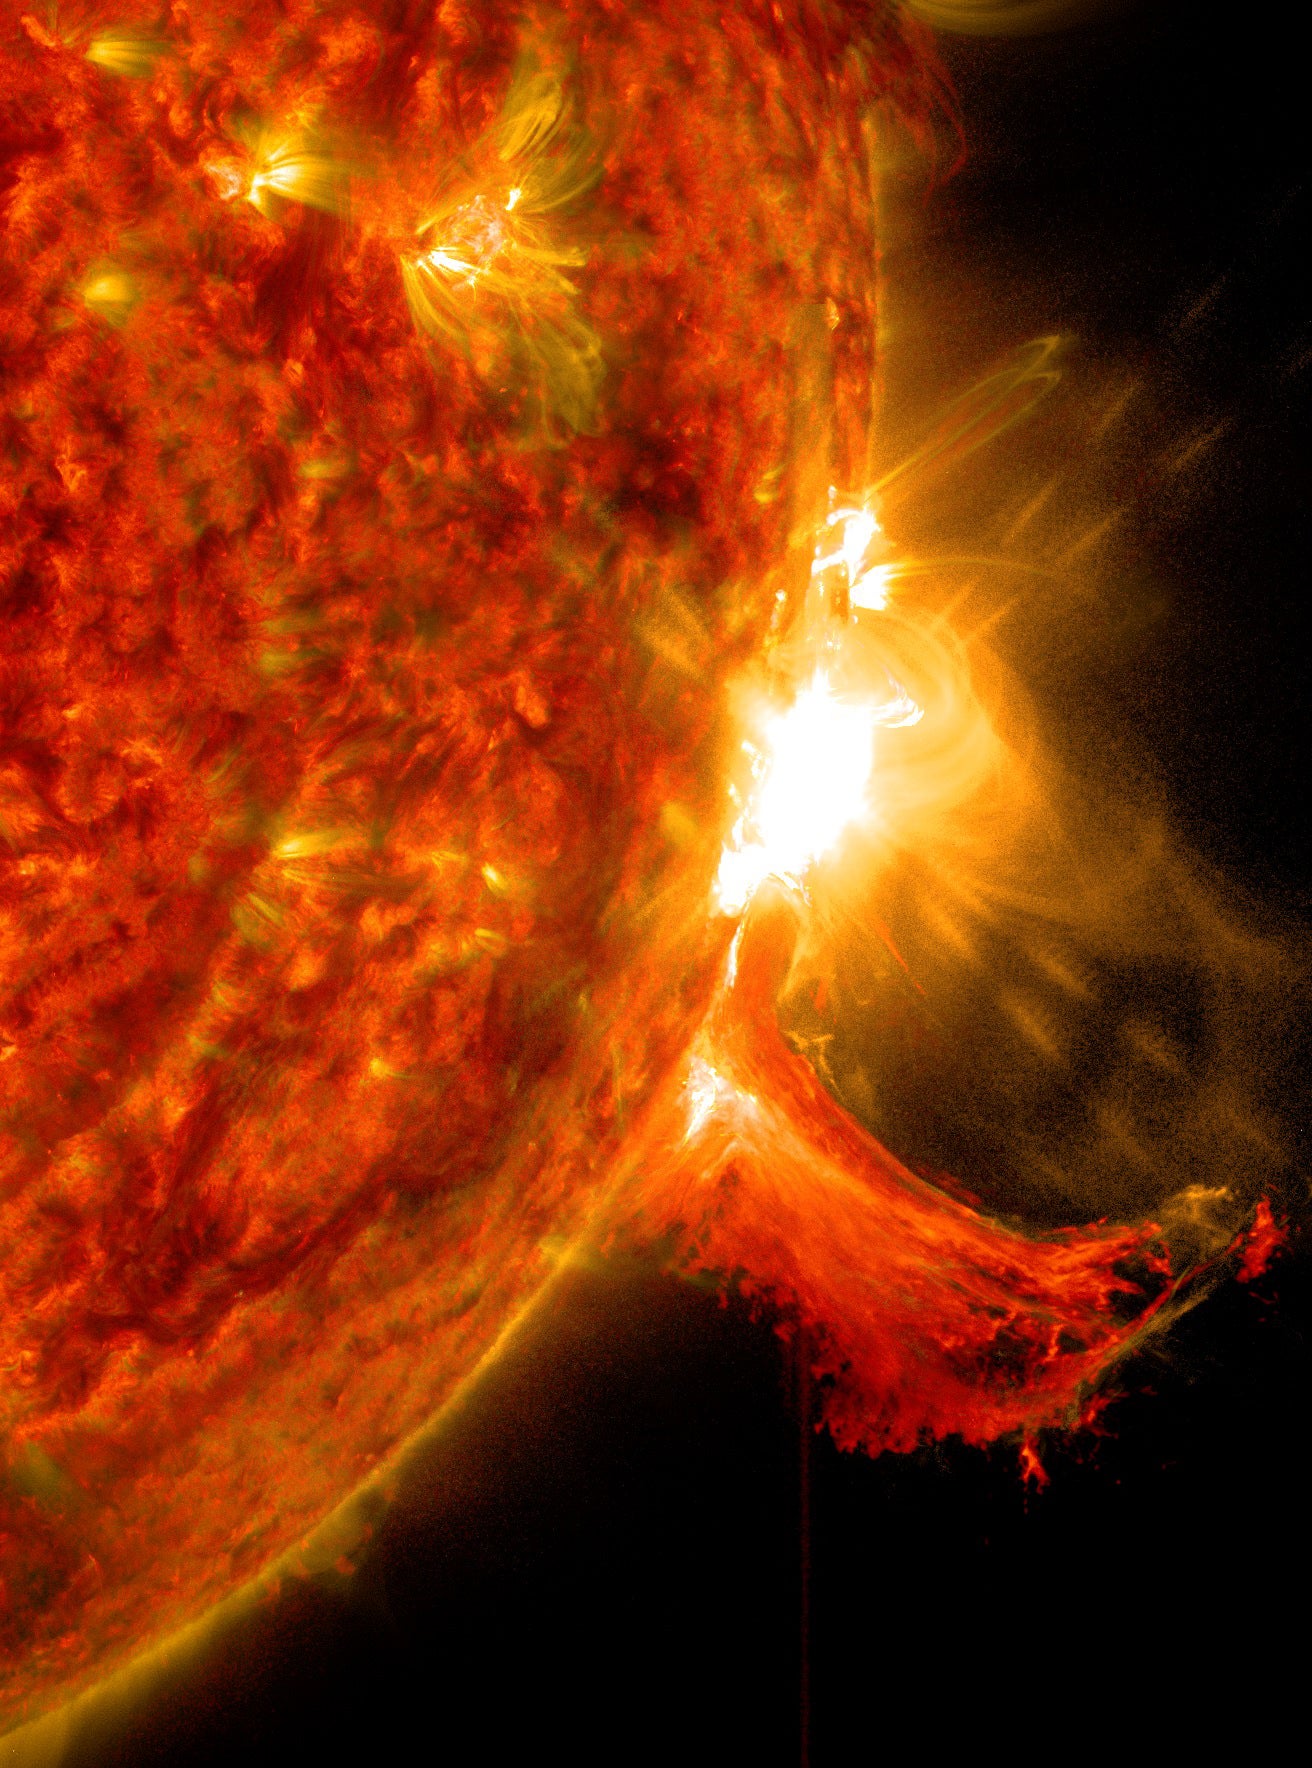 A solar flare captured by Nasa’s Solar Dynamics Observatory